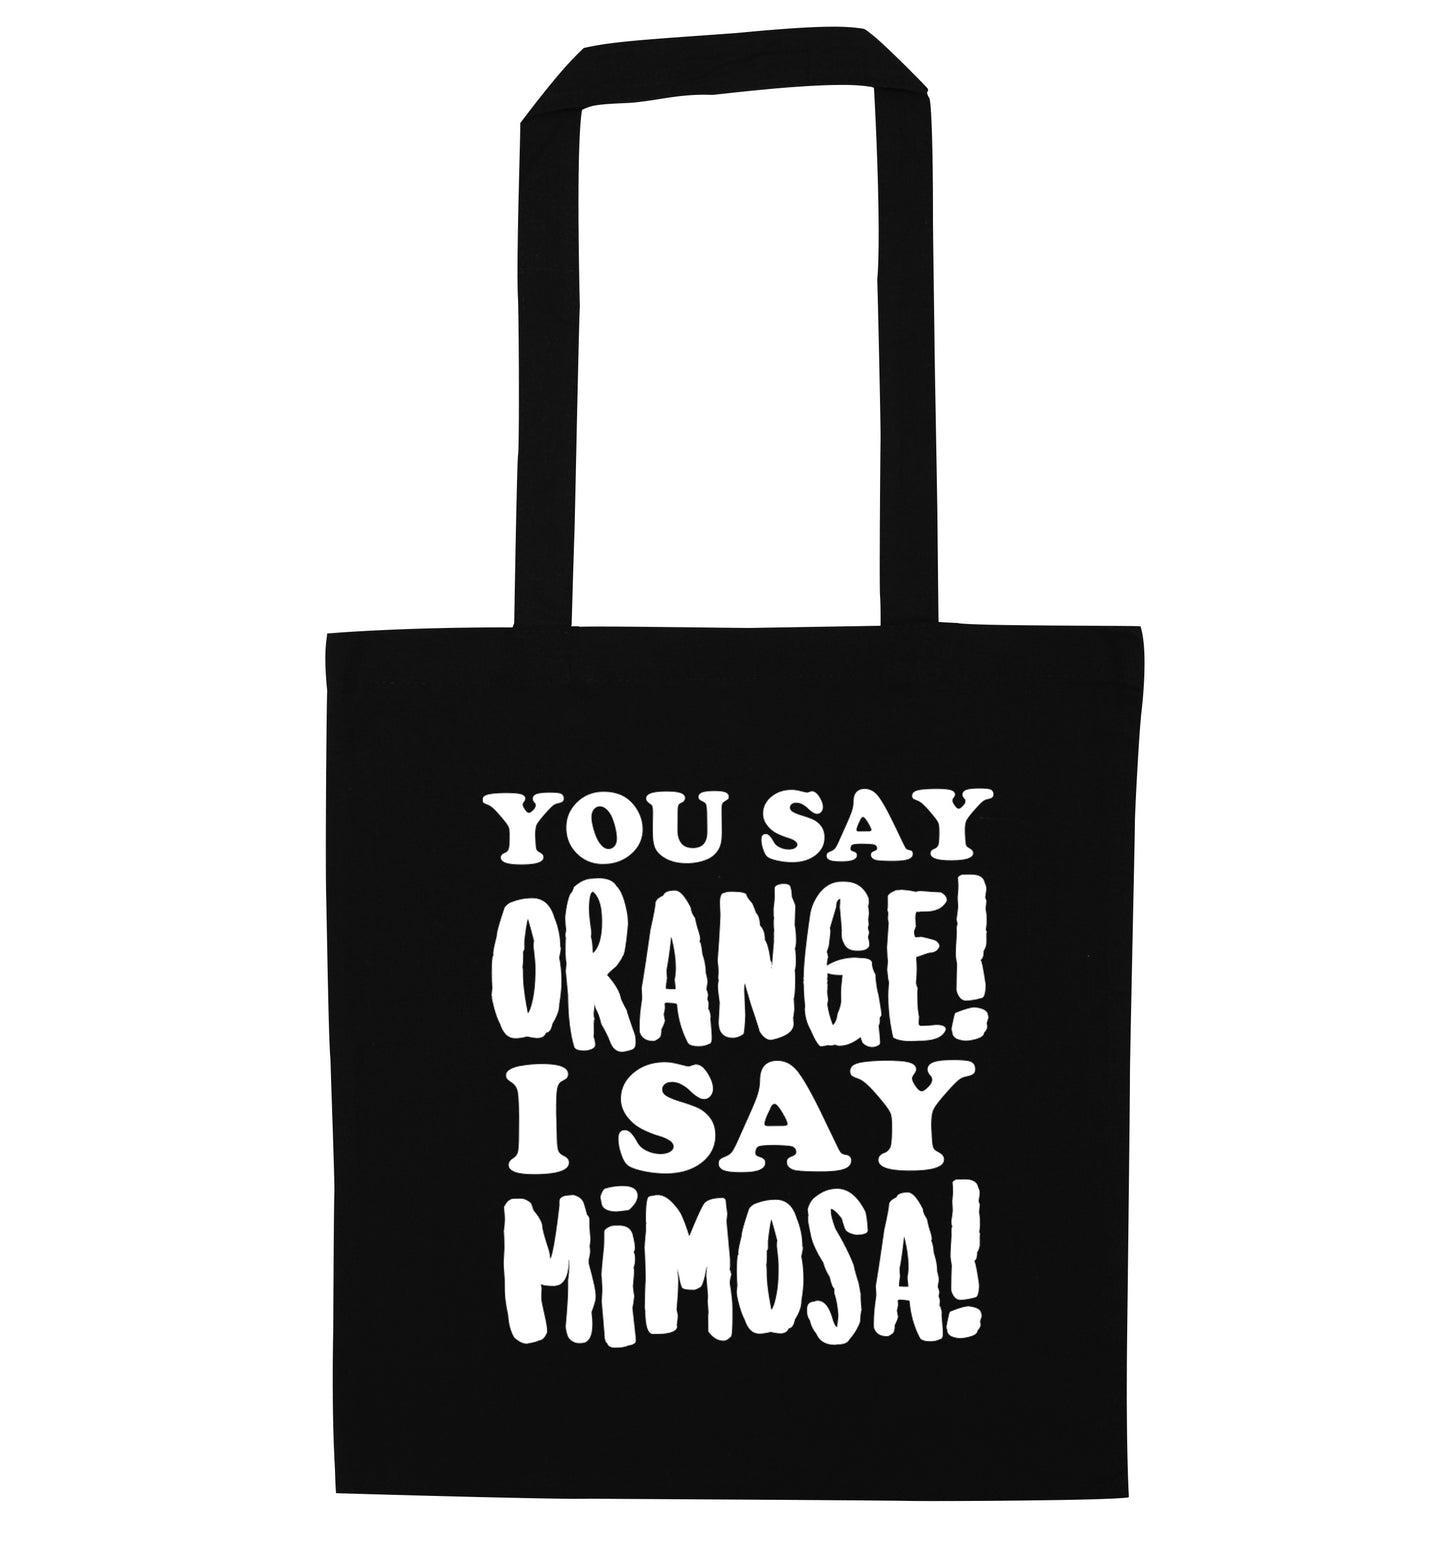 You say orange I say mimosa! black tote bag